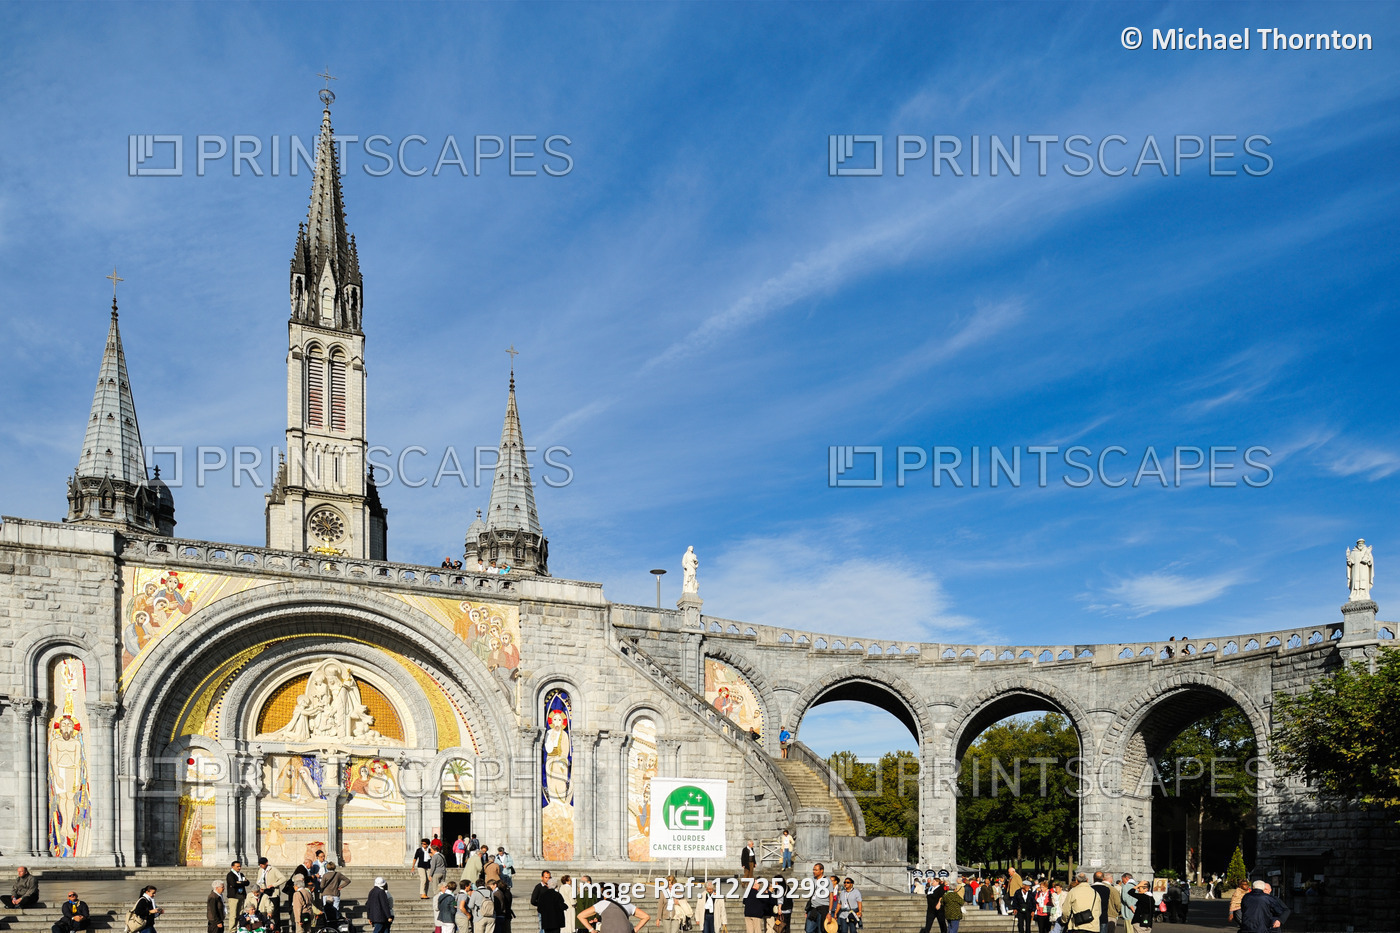 Sanctuary of our lady of Lourdes, Hautes-Pyrenees, France